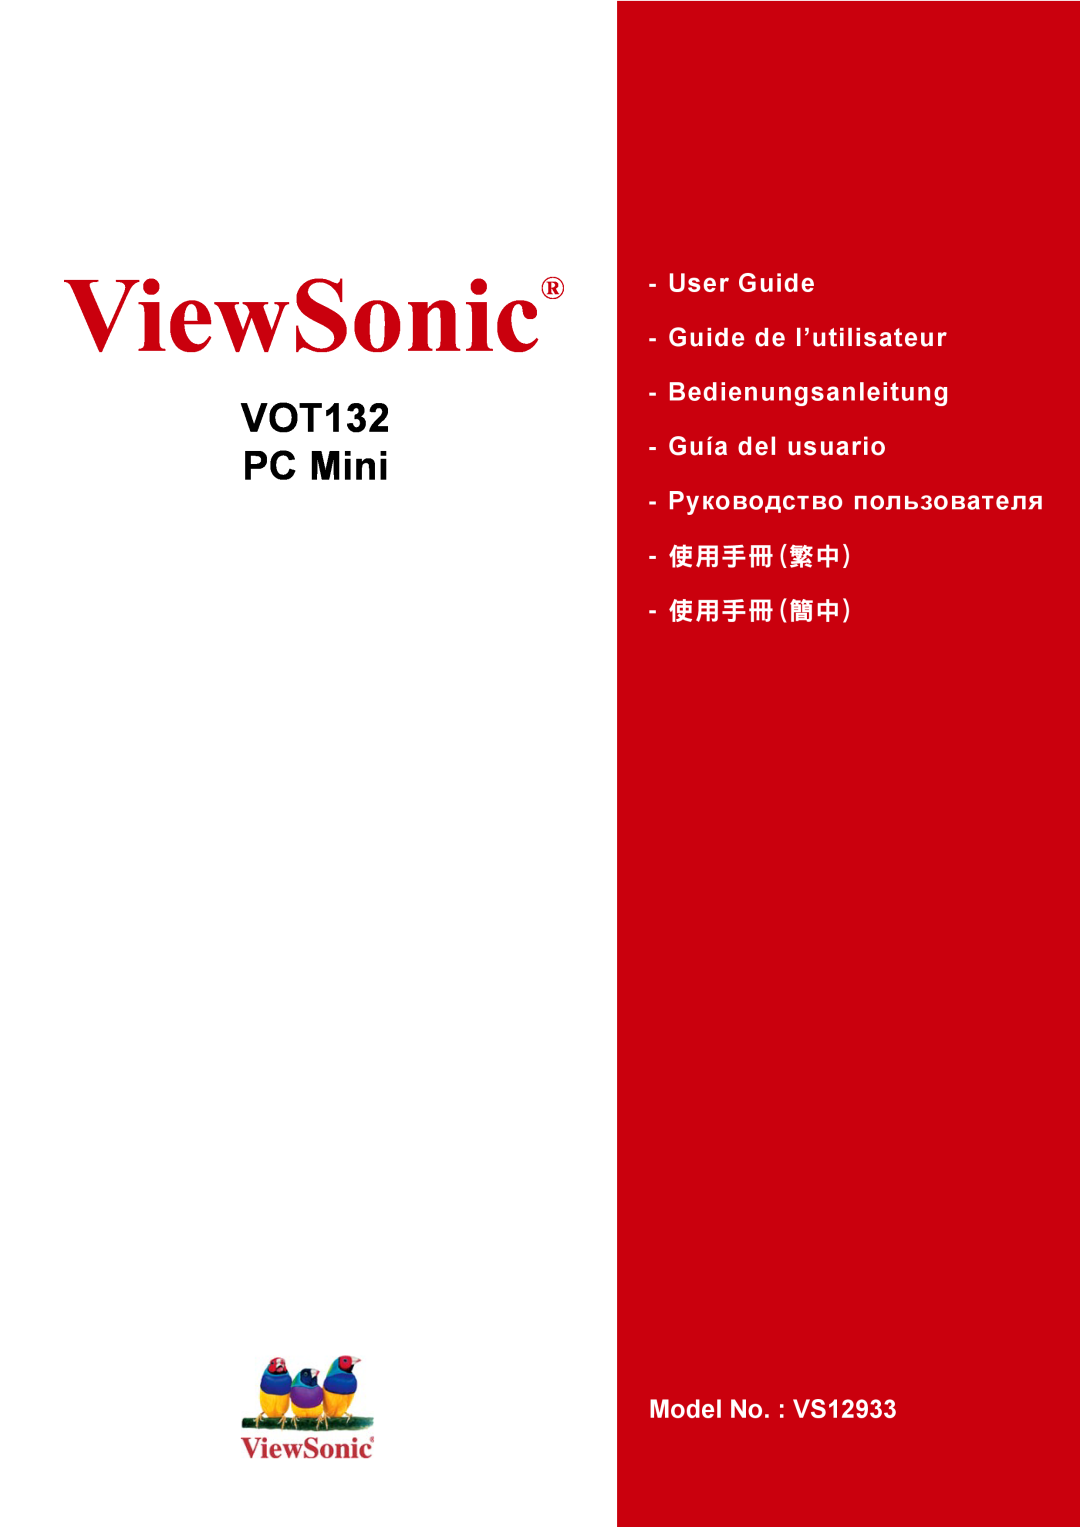 ViewSonic VS12933 manual ViewSonic, VOT132 PC Mini, User Guide Guide de l’utilisateur Bedienungsanleitung, 使用手冊繁中 使用手冊簡中 